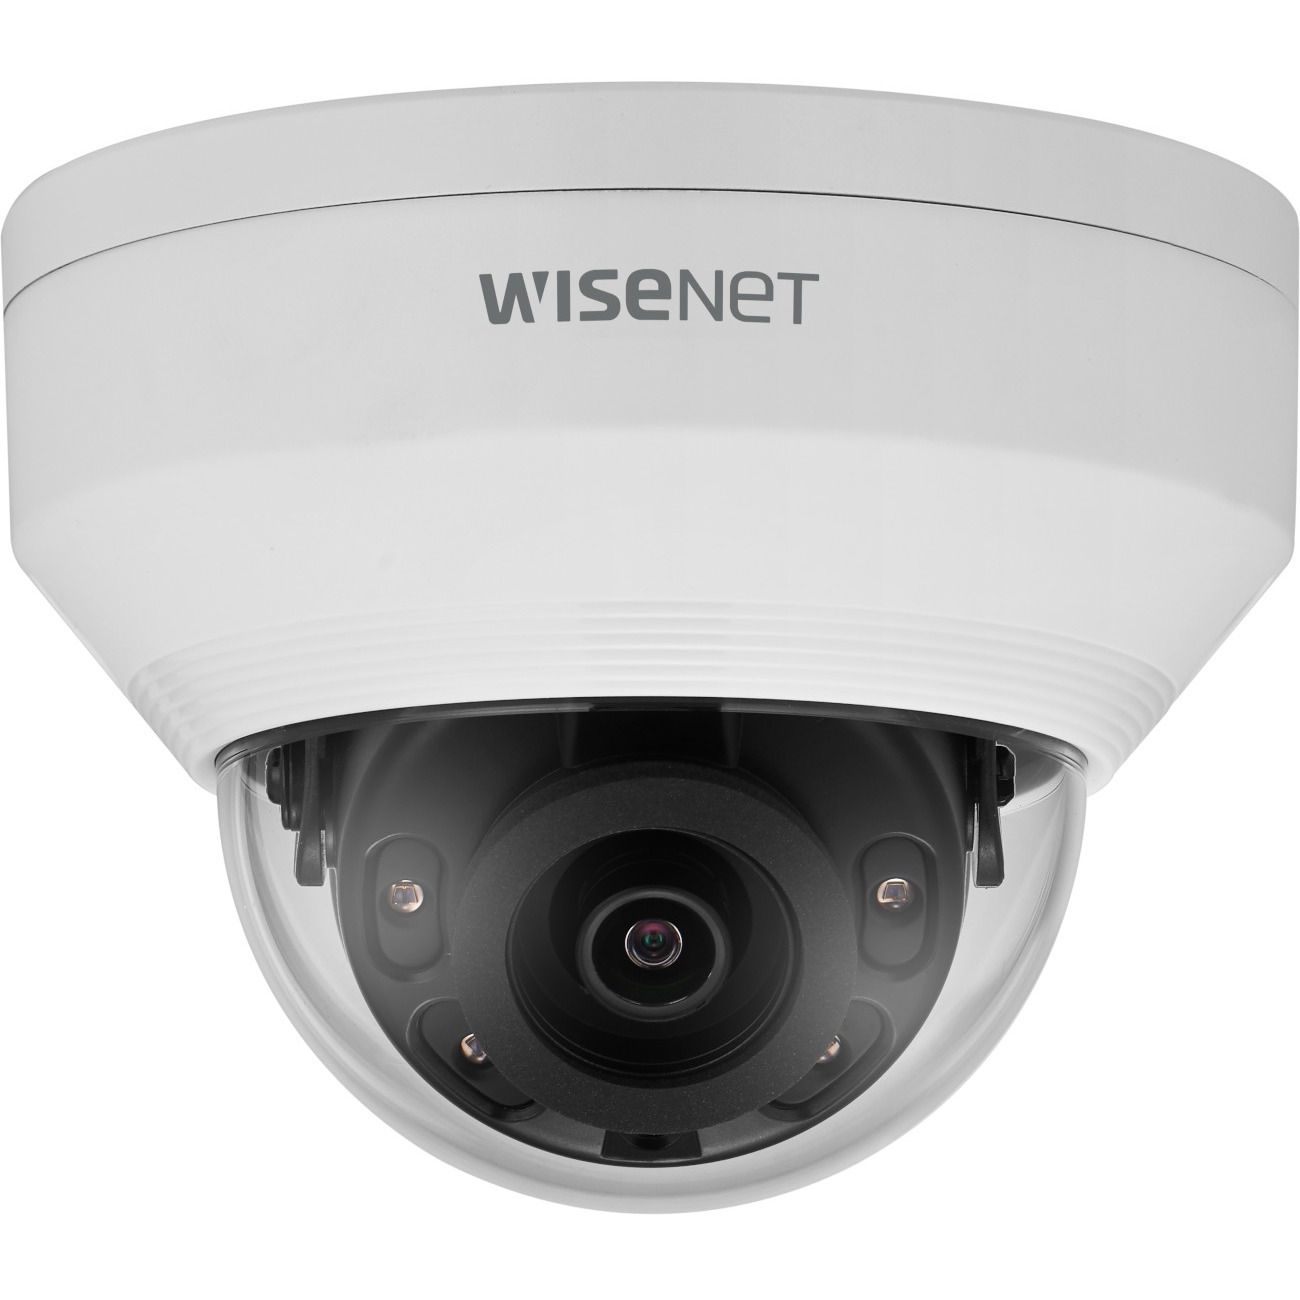 Wisenet ANV-L7012R 4 Megapixel Network Camera - Color - Dome - White